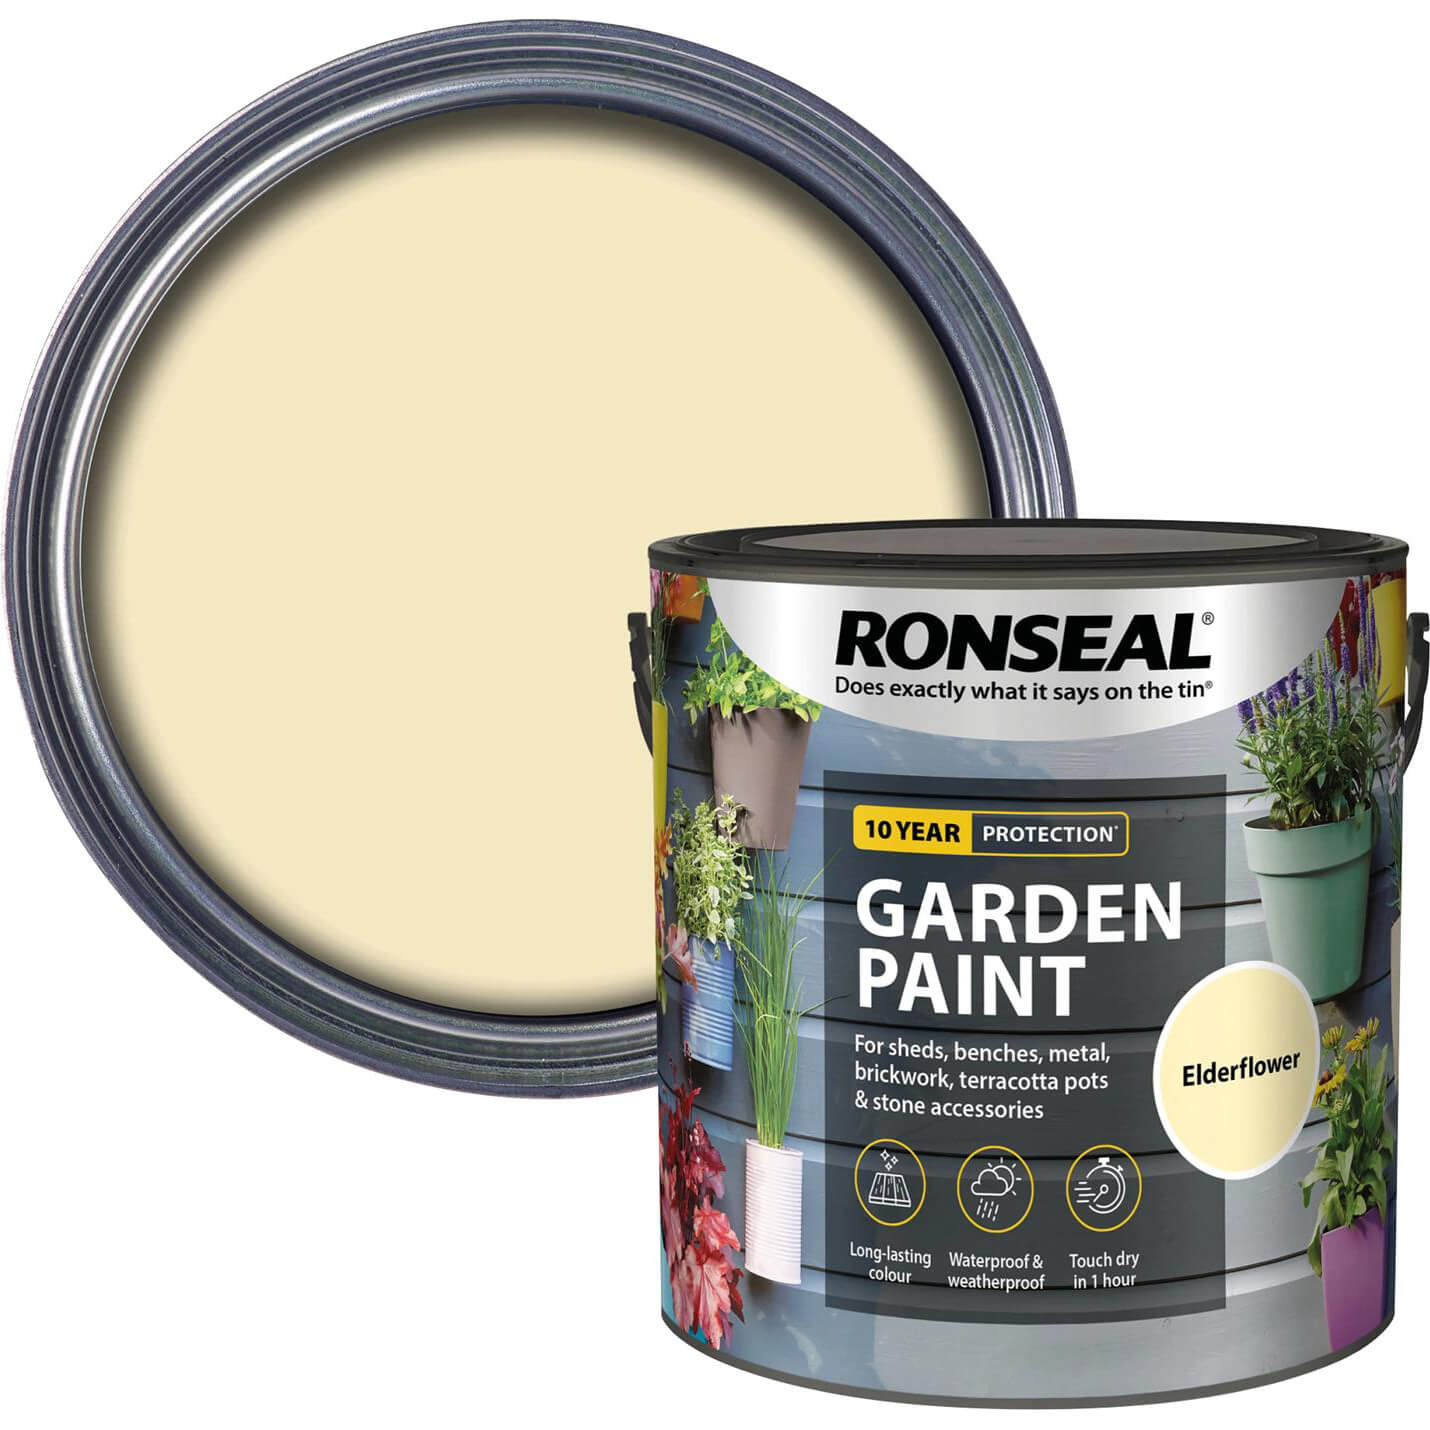 Image of Ronseal General Purpose Garden Paint Elderflower 2.5l